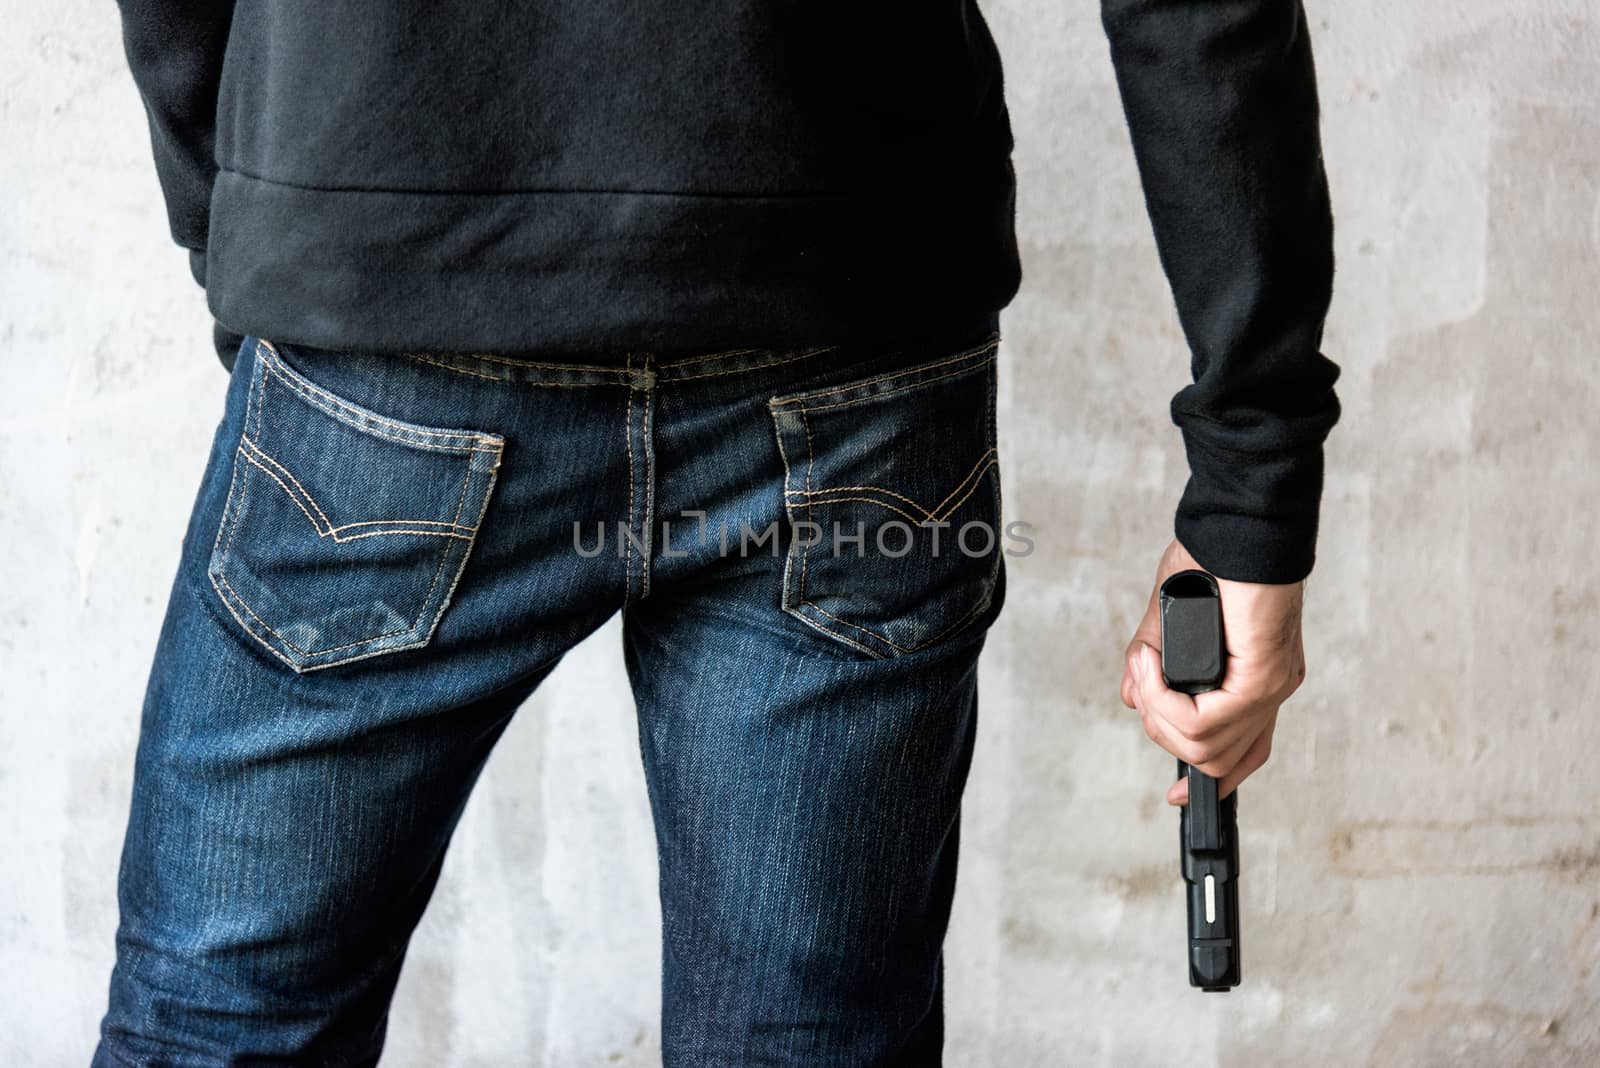 Killer holding a gun side him by Sorapop